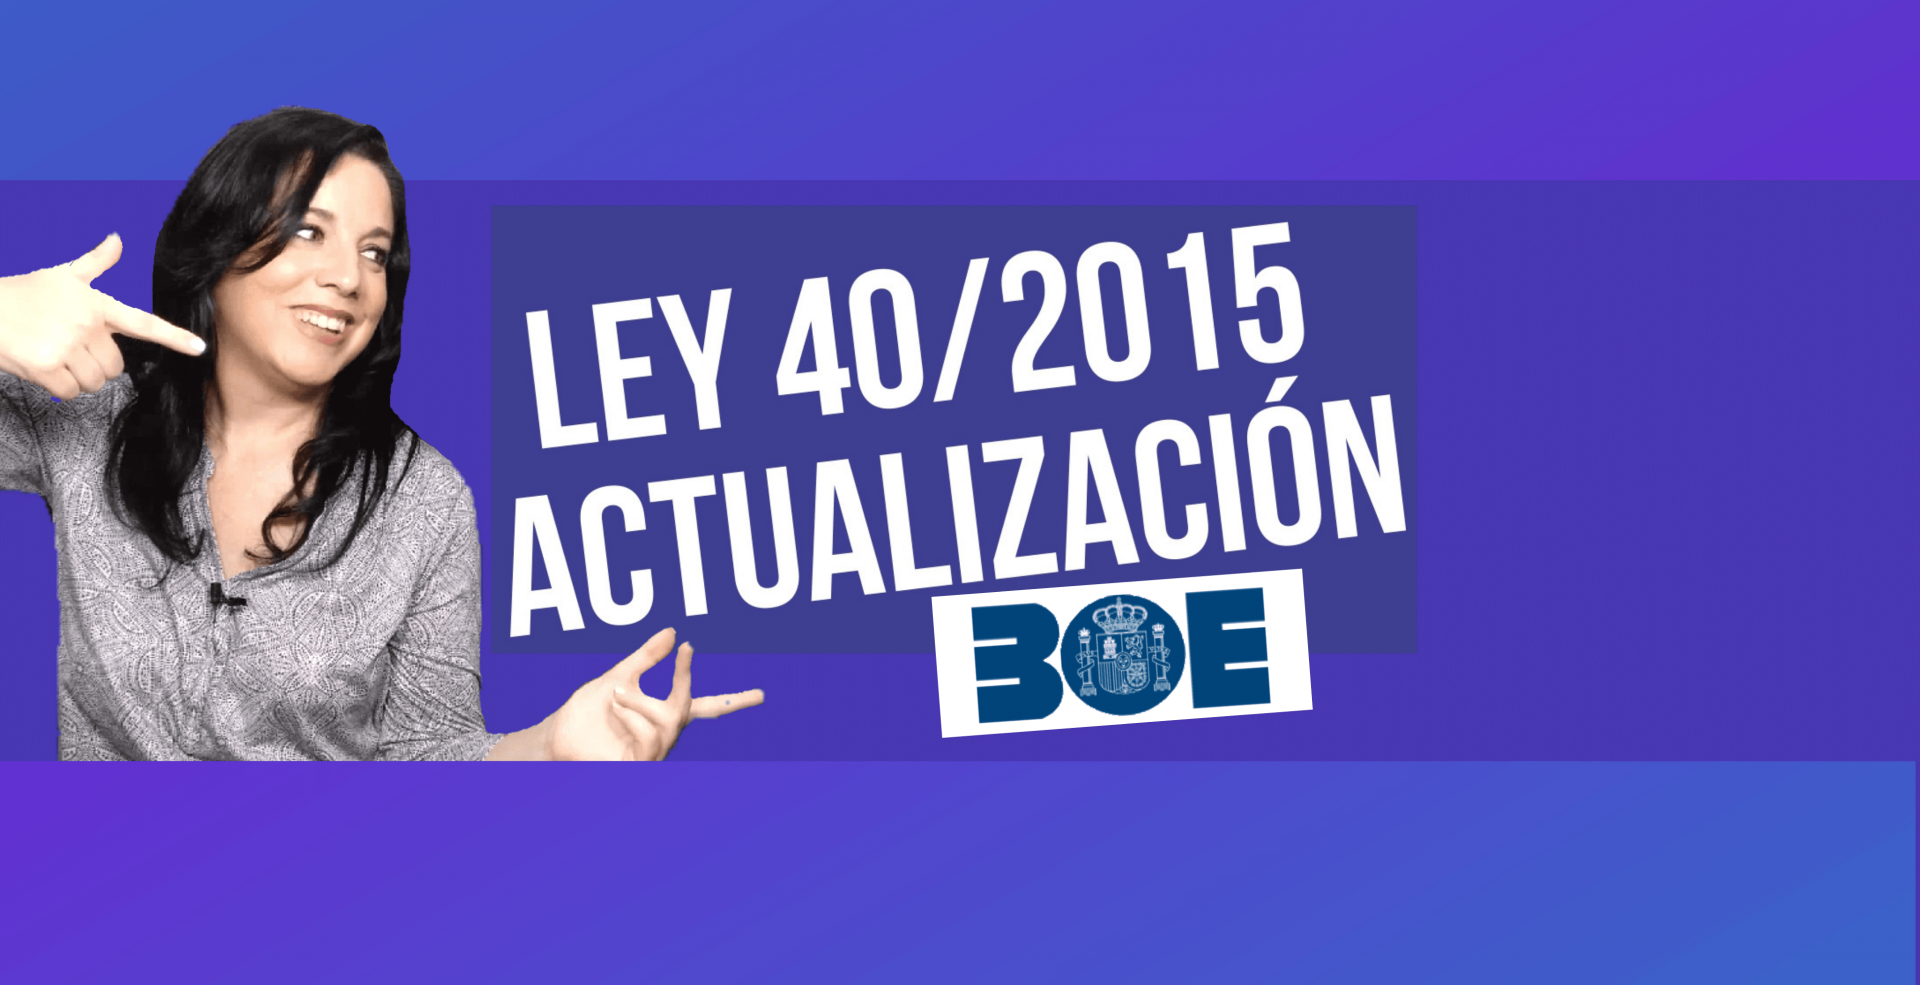 ley 40/2015 actualizada boe